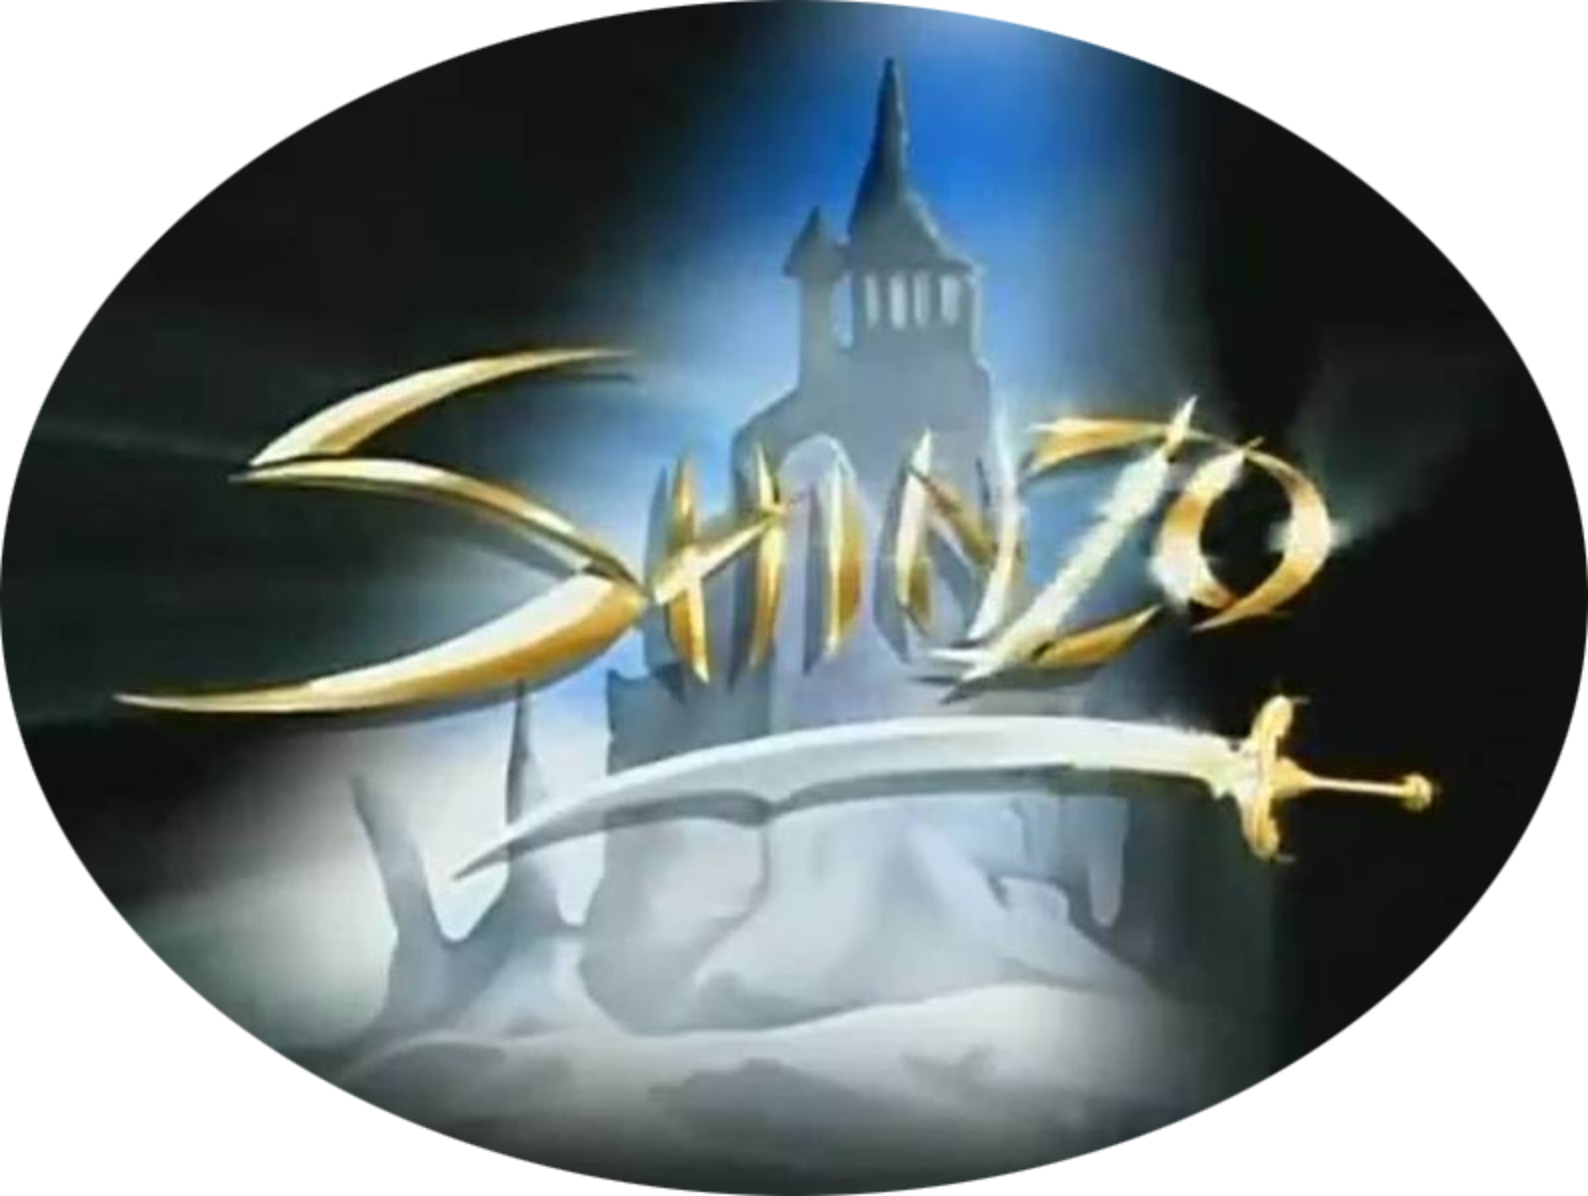 Shinzo (4 DVDs Box Set)